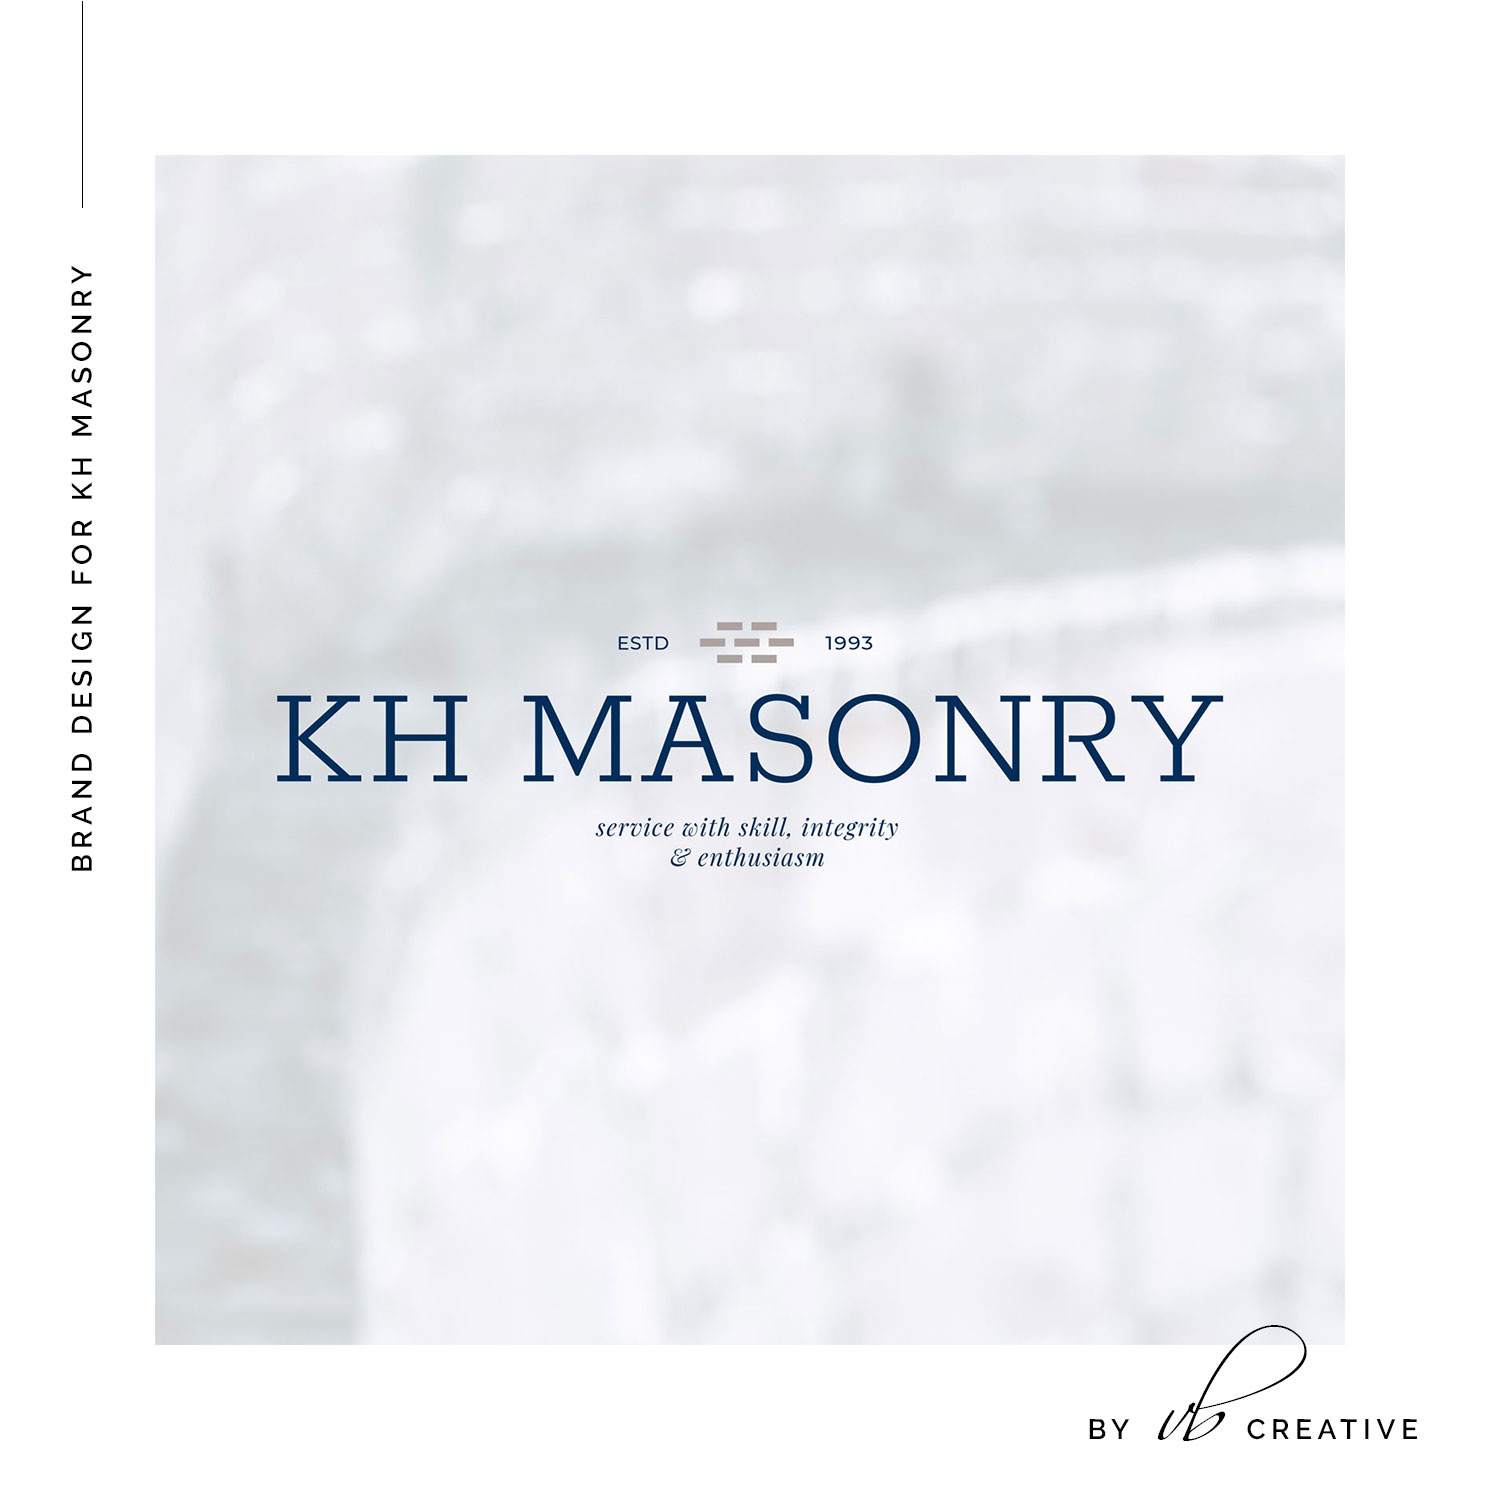 KH masonry wordmark logo design